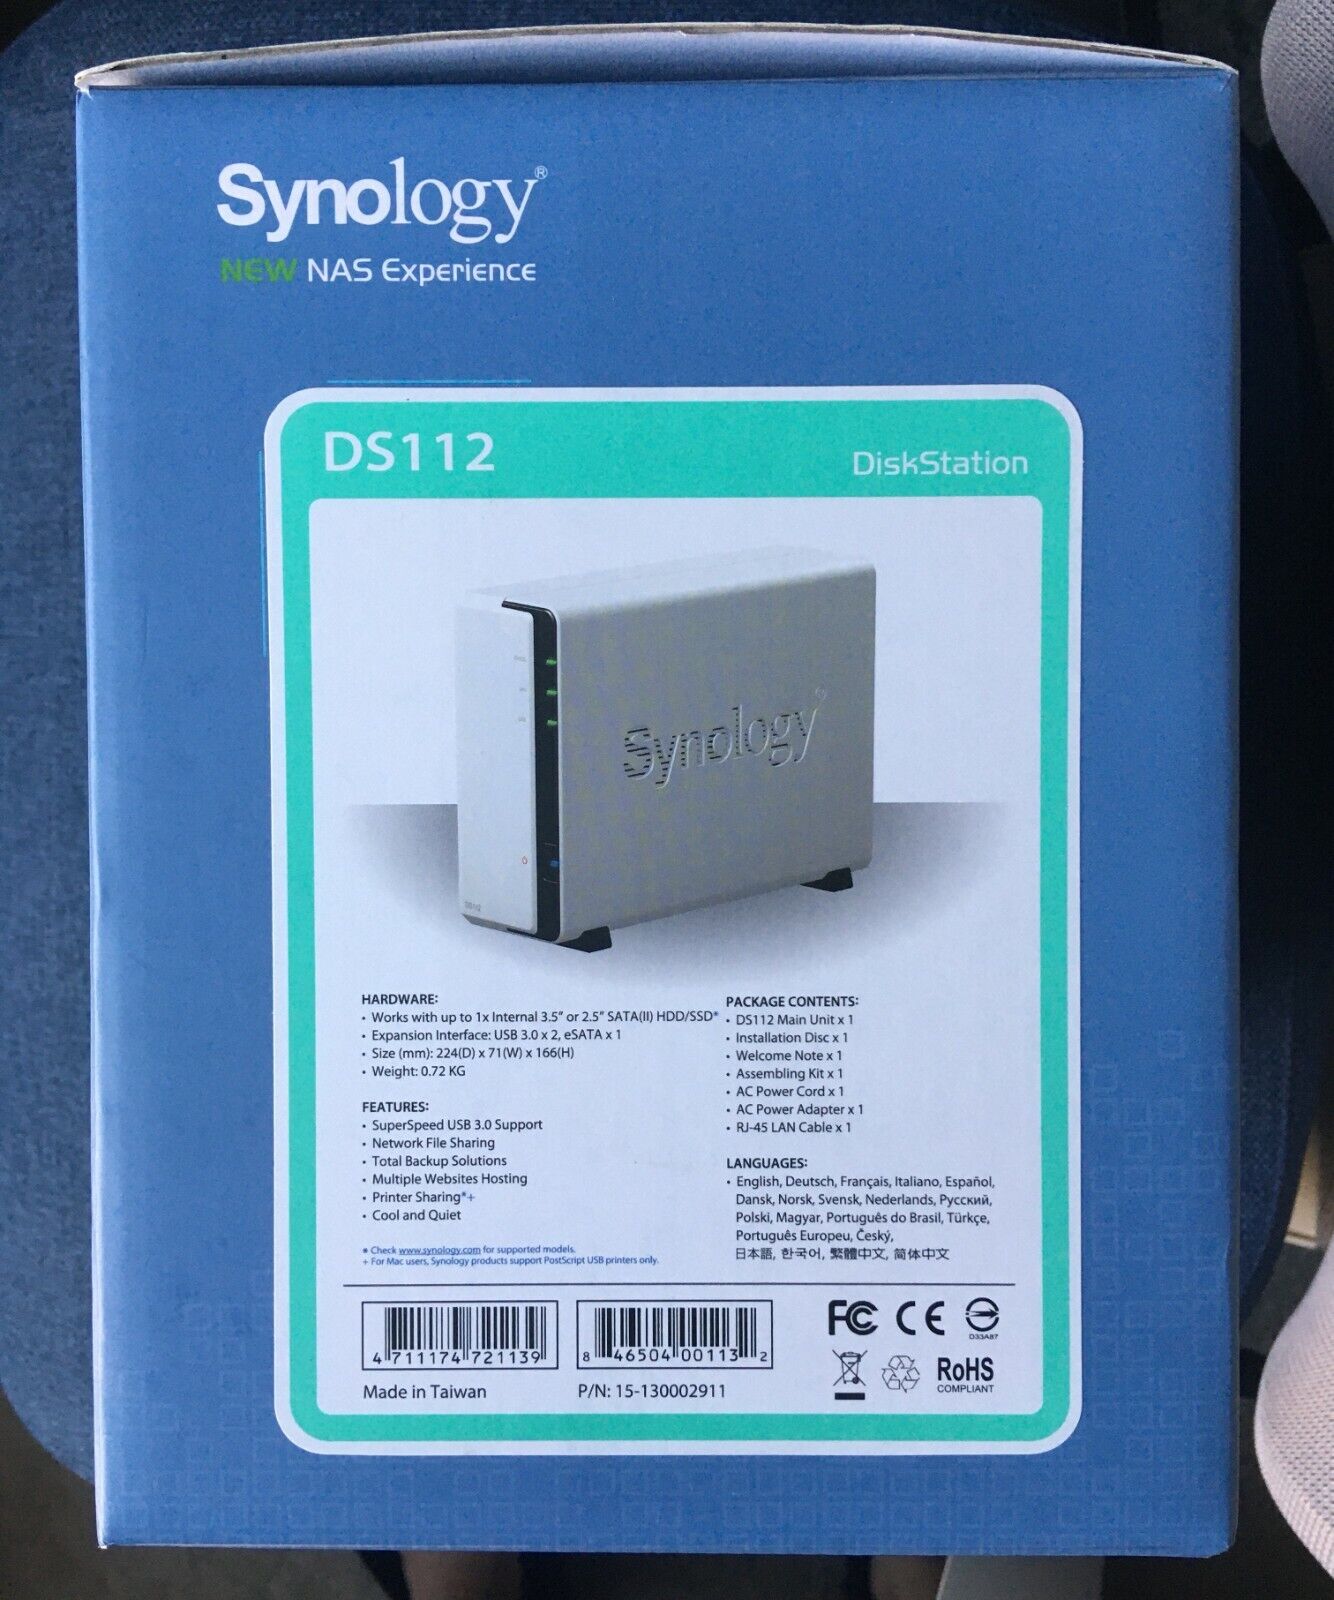 Synology DiskStation DS112 Network Attached Storage NAS Enclosure Server